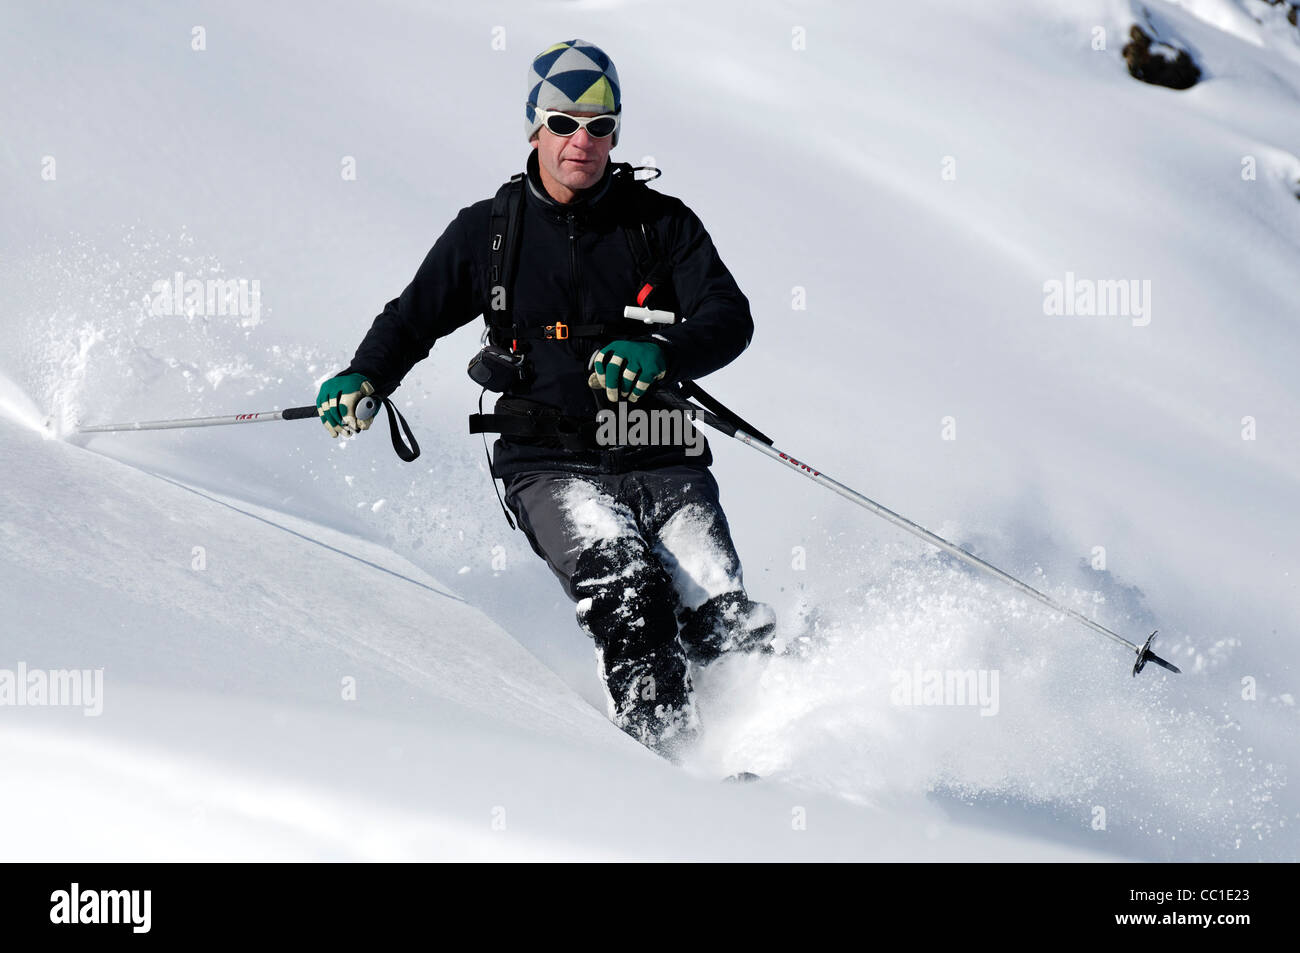 Off piste skiing in Arolla Switzerland Stock Photo